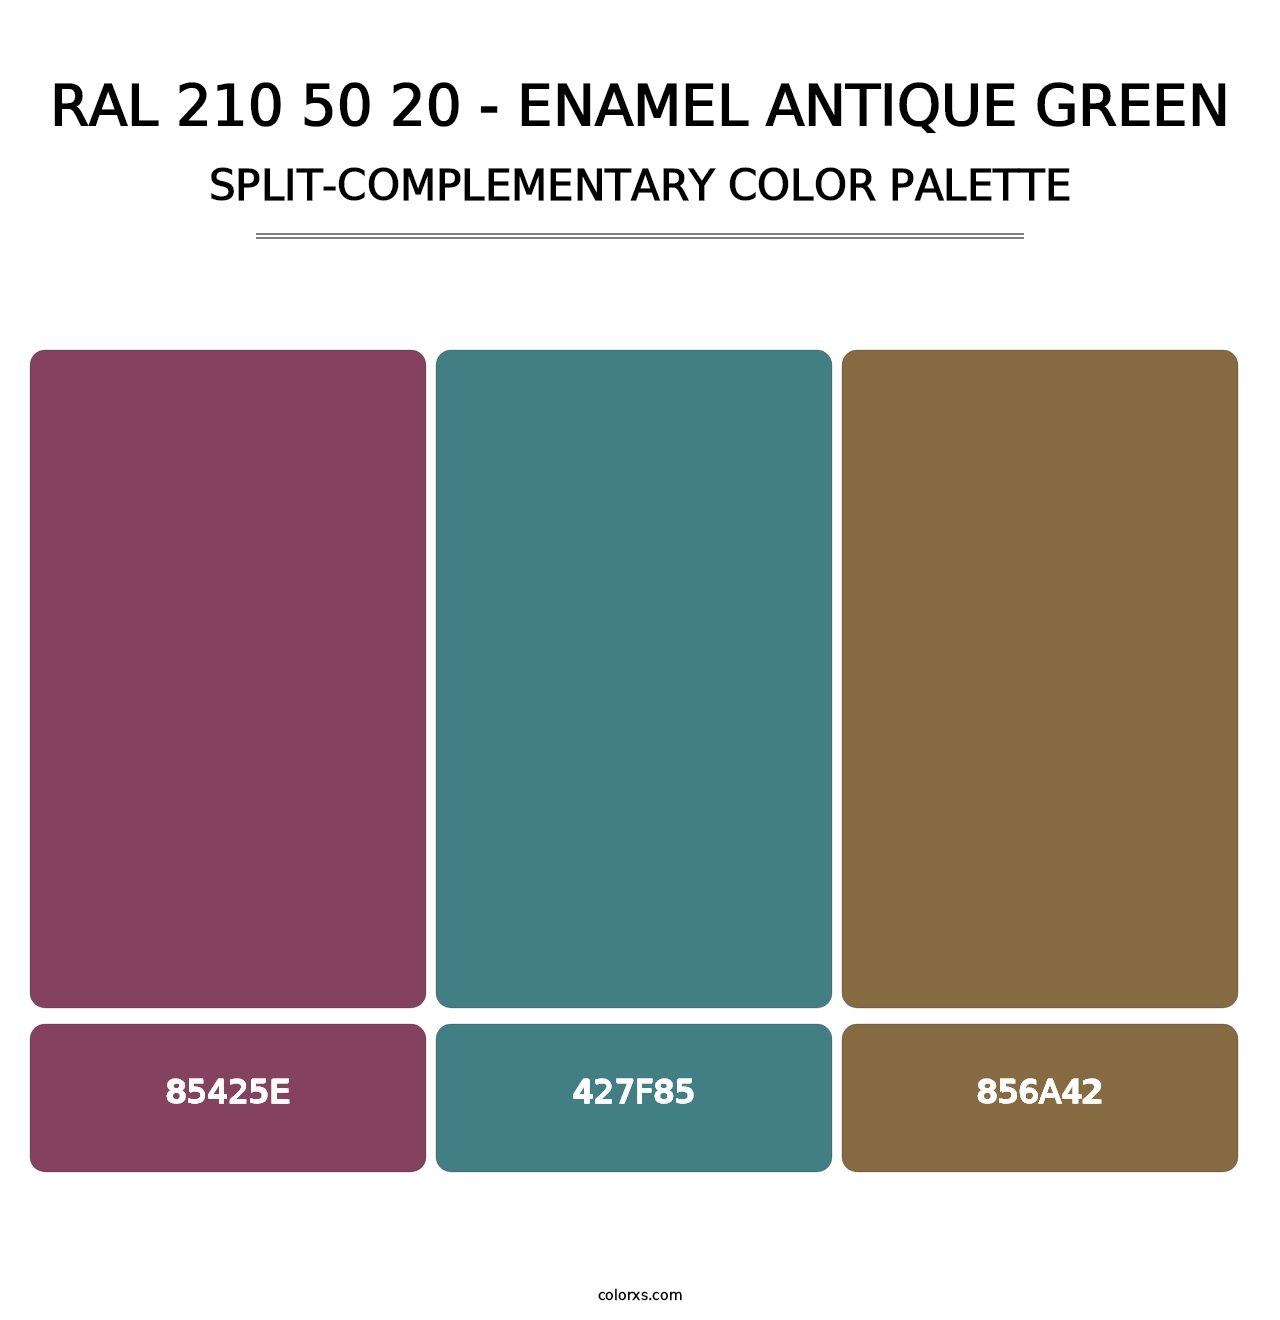 RAL 210 50 20 - Enamel Antique Green - Split-Complementary Color Palette